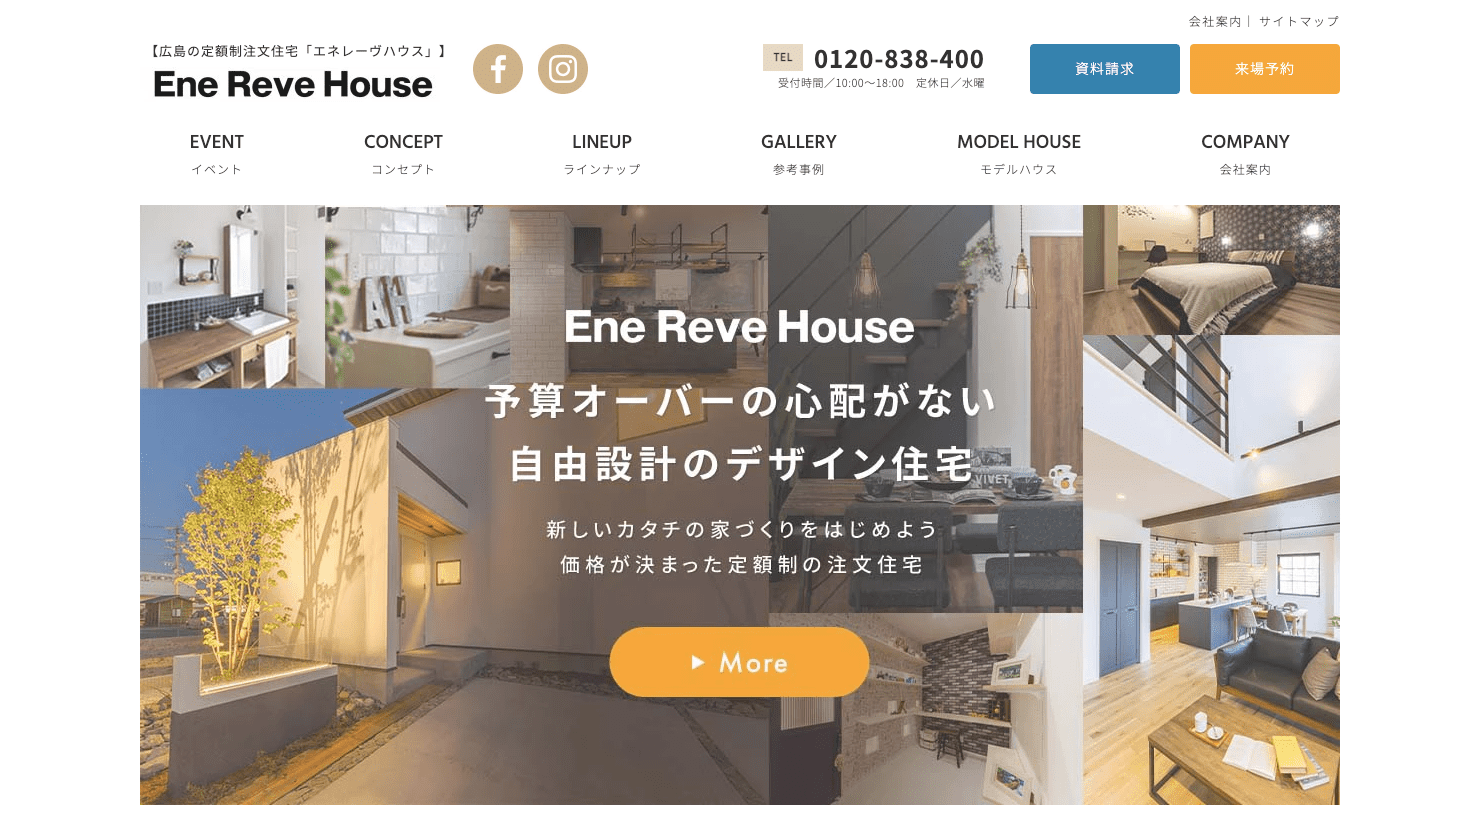 Ene Reve House「エネレーヴハウス」